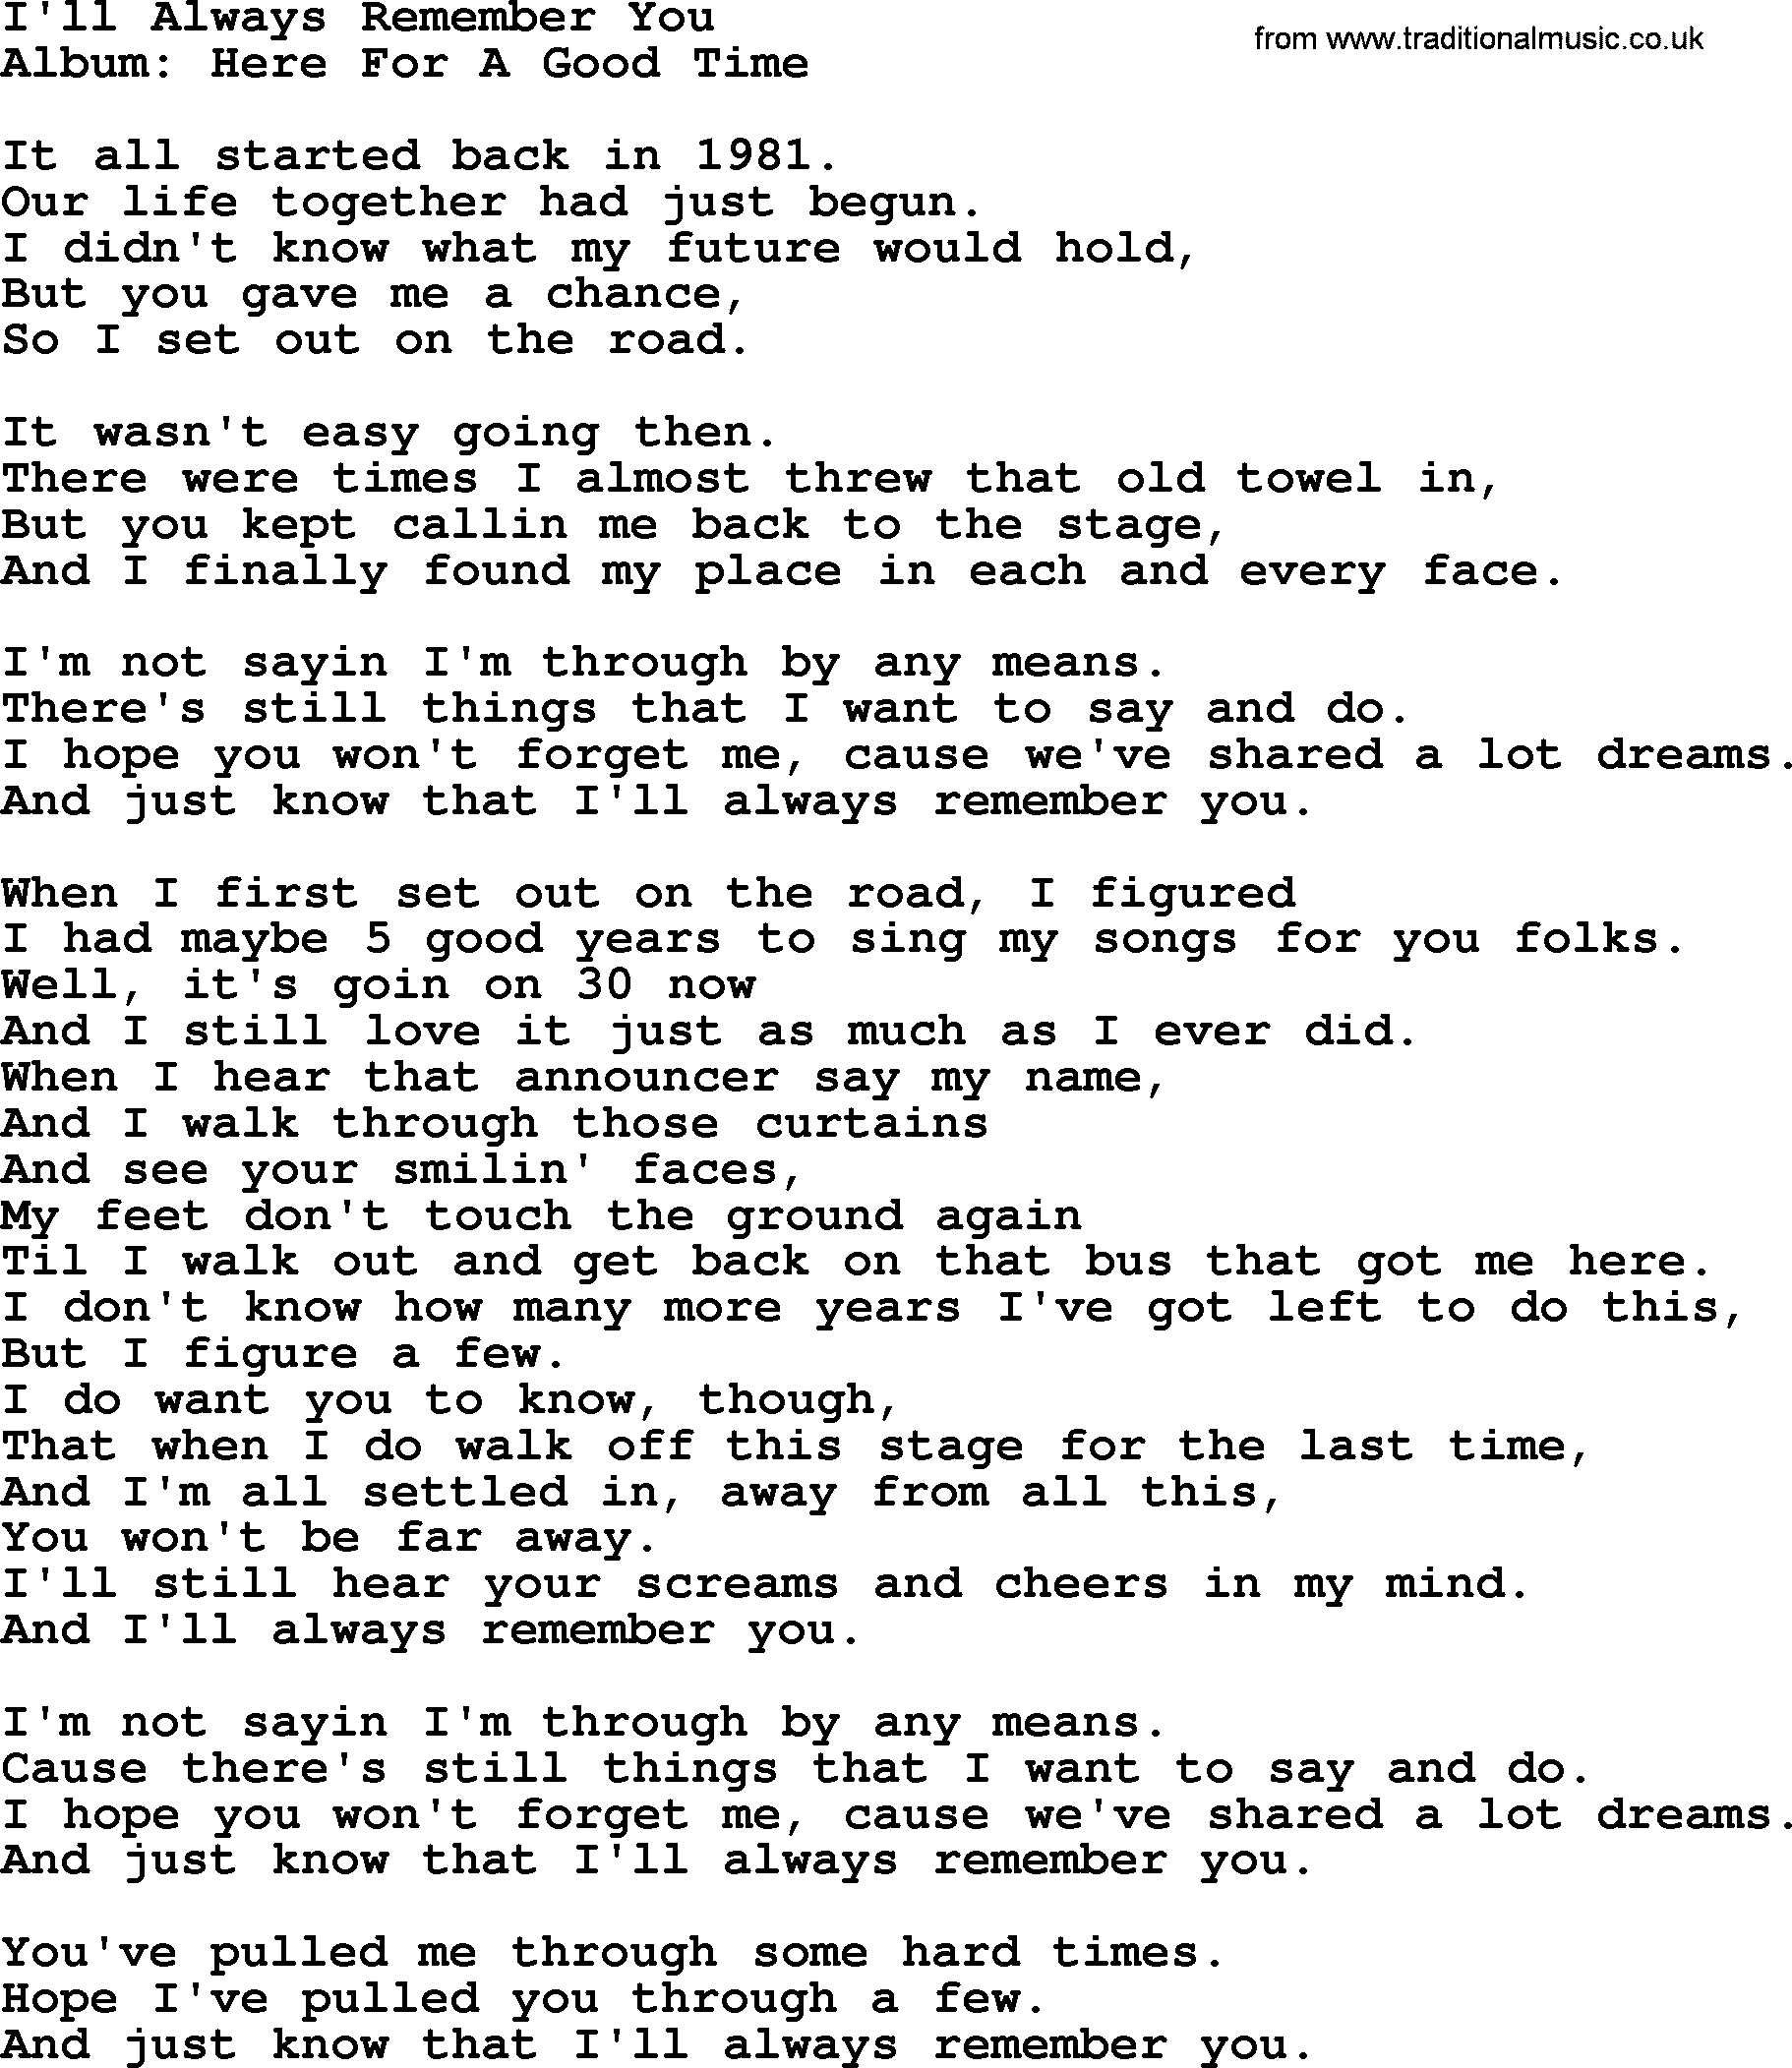 George Strait song: I'll Always Remember You, lyrics